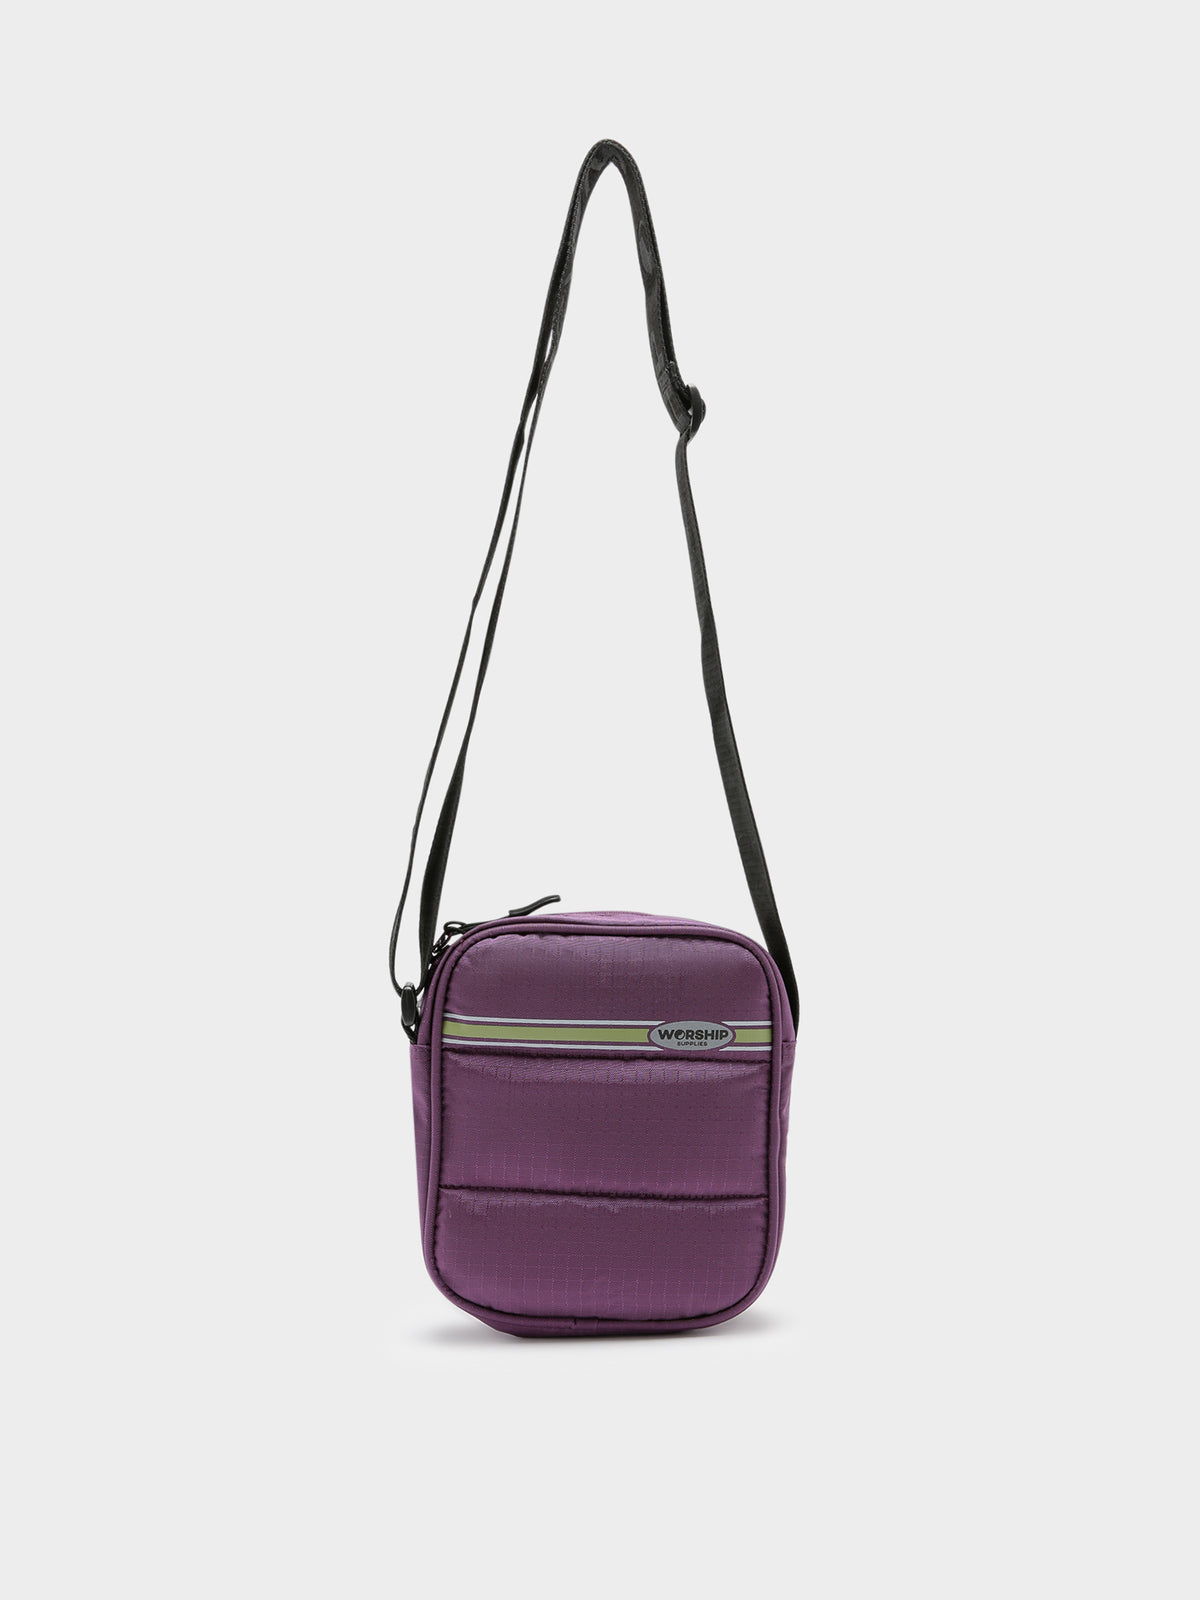 Vino Shoulder Bag in Grape